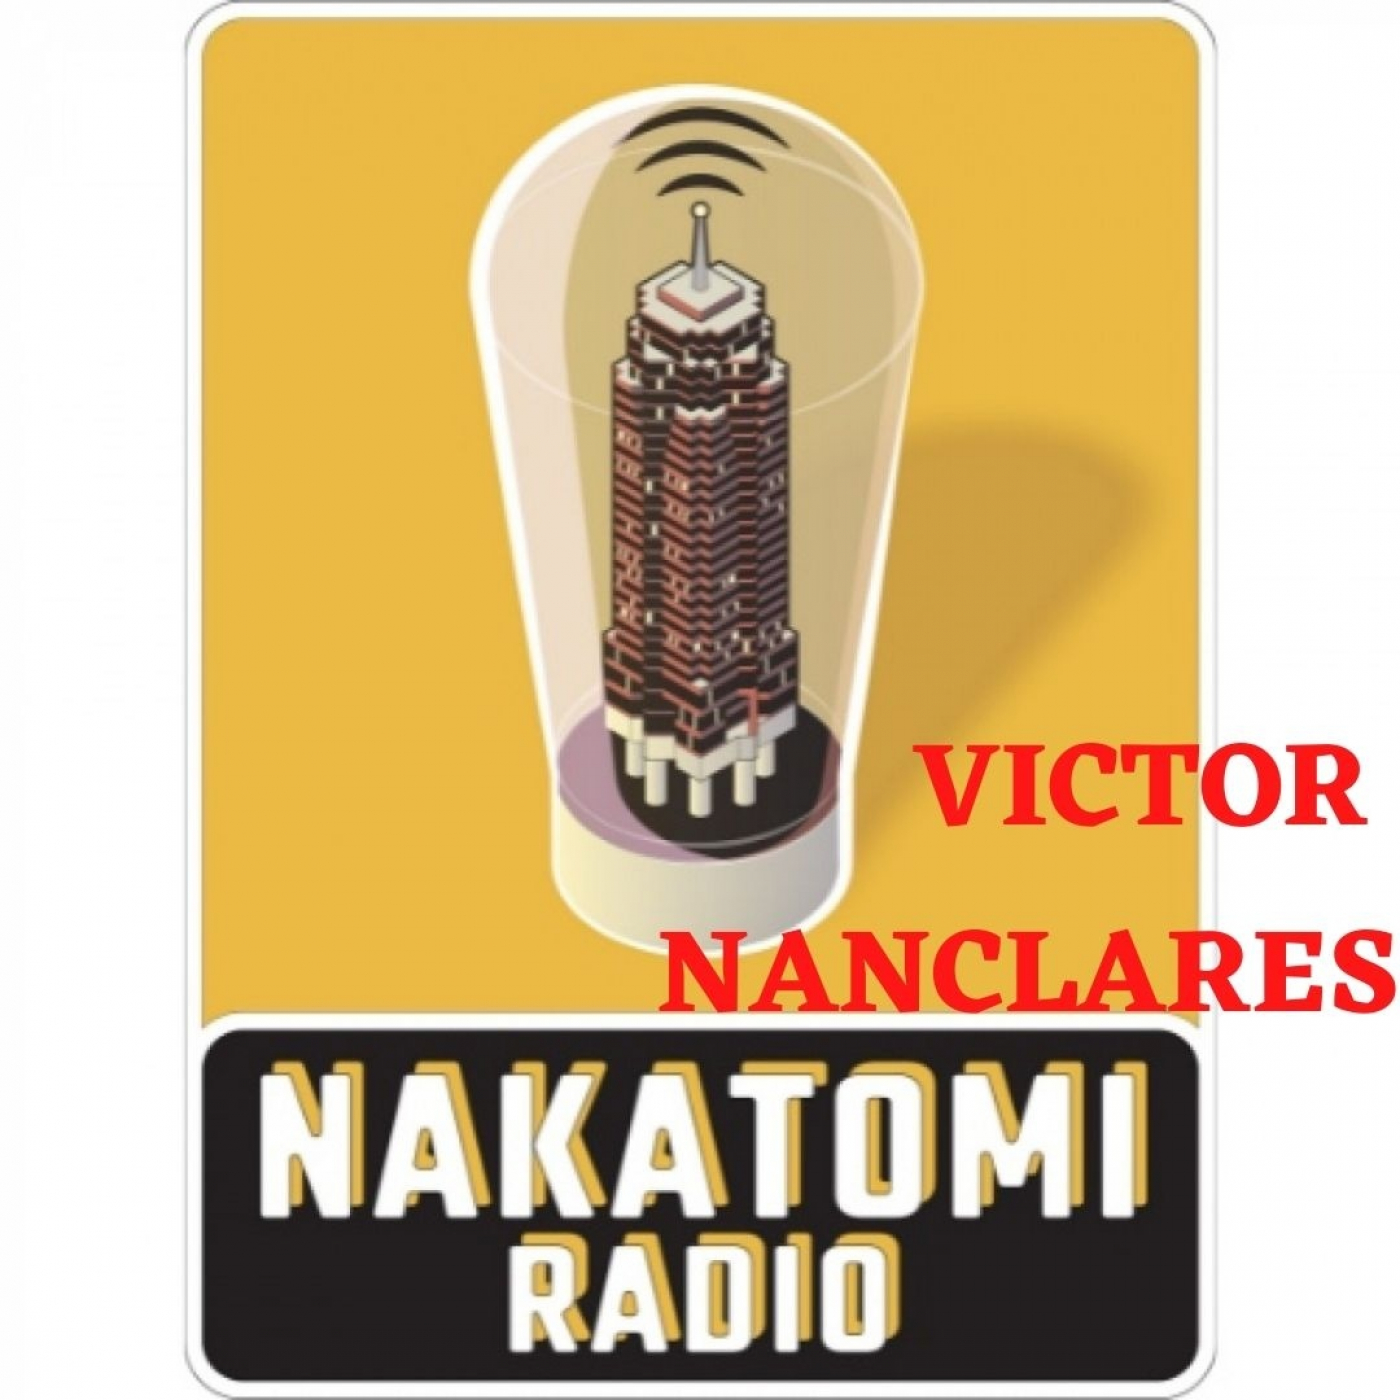 #31 Victor Nanclares (Nakatomi Radio)